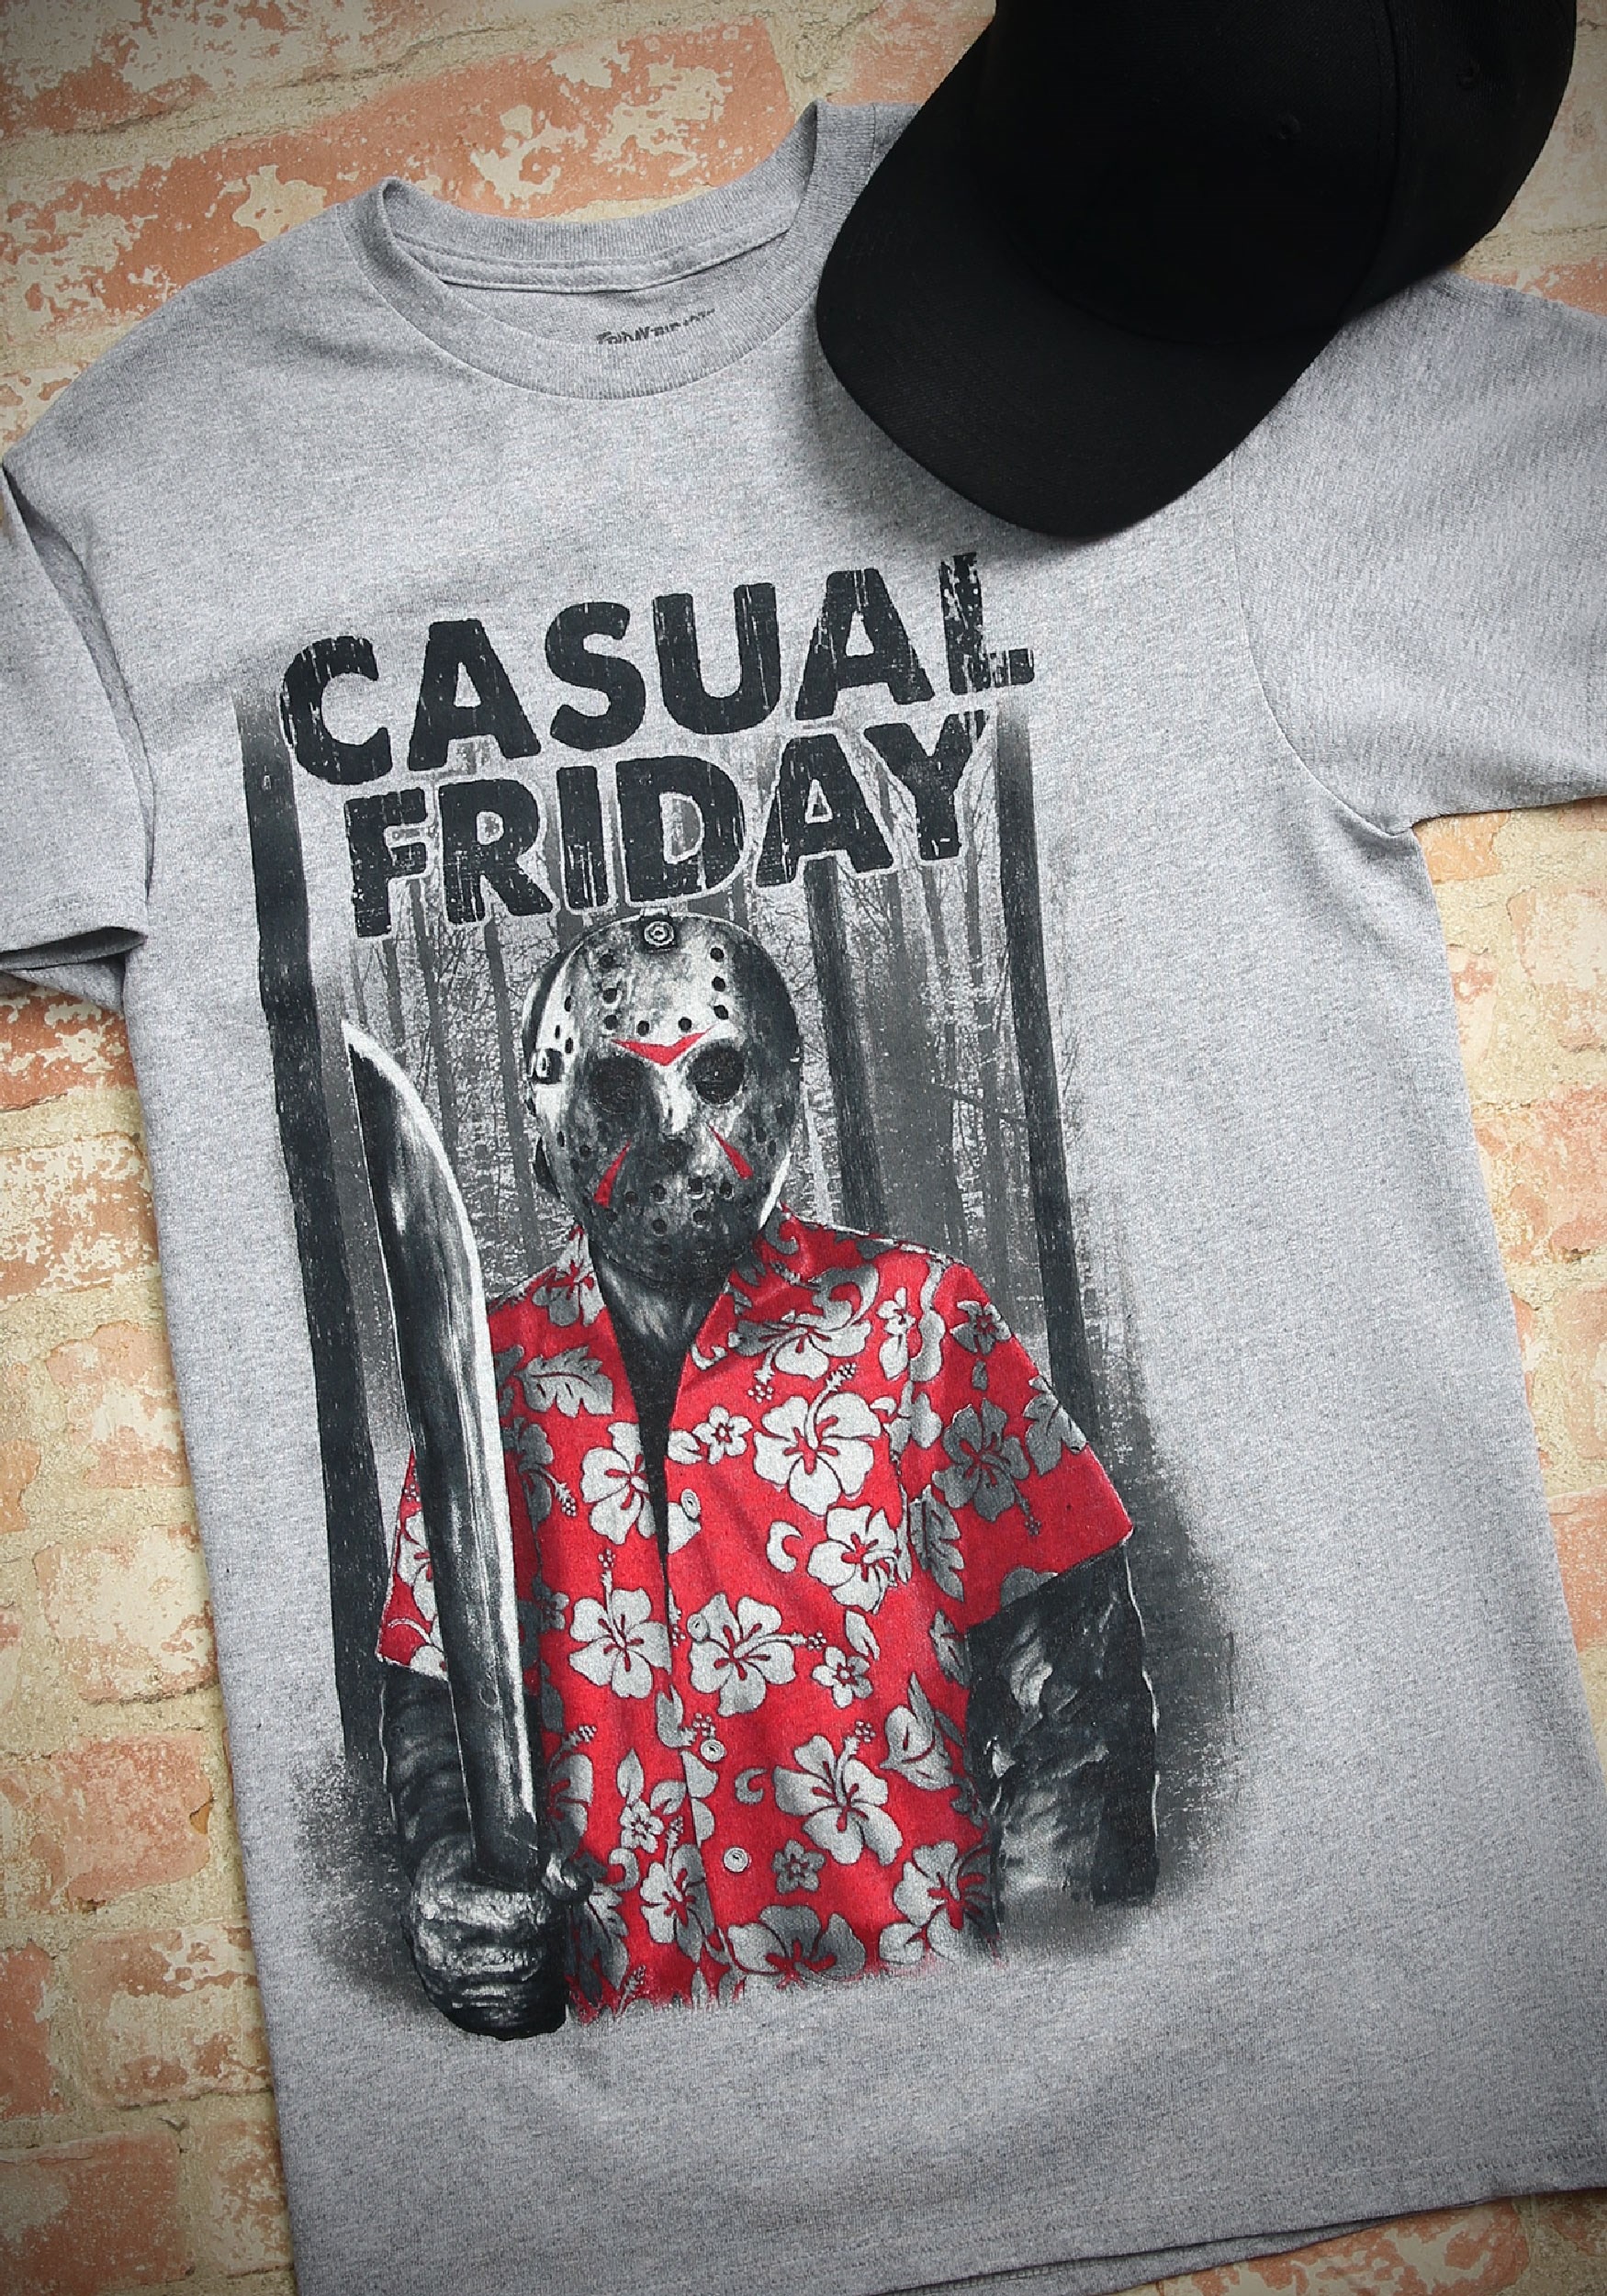 Jason Casual Friday T-Shirt Friday the 13th